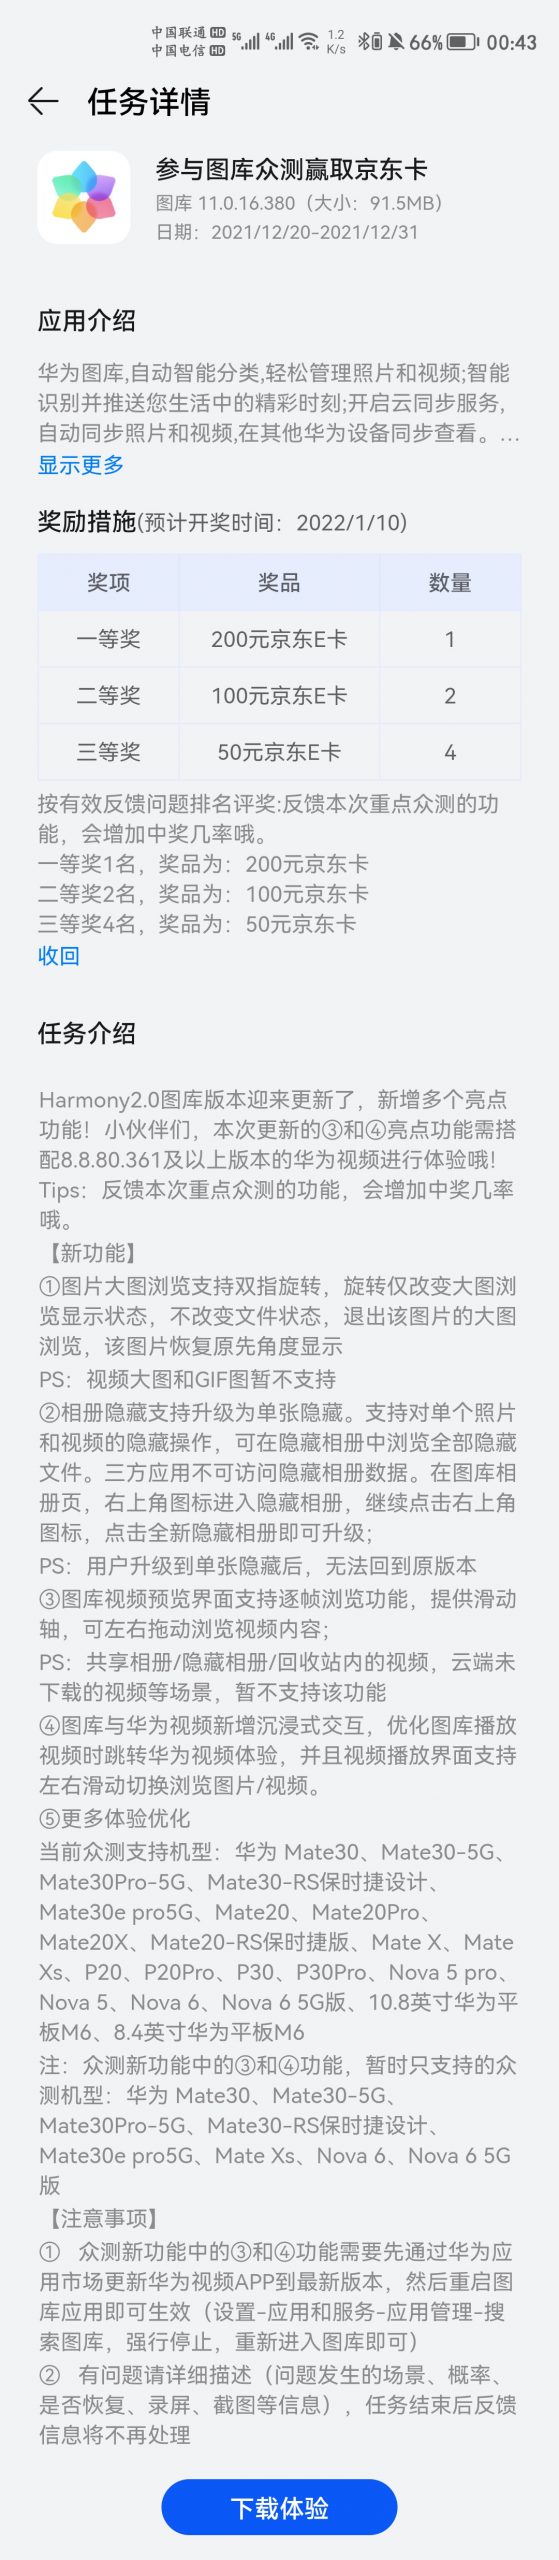 HarmonyOS 2.0 Gallery App 11.0.16.380 public beta